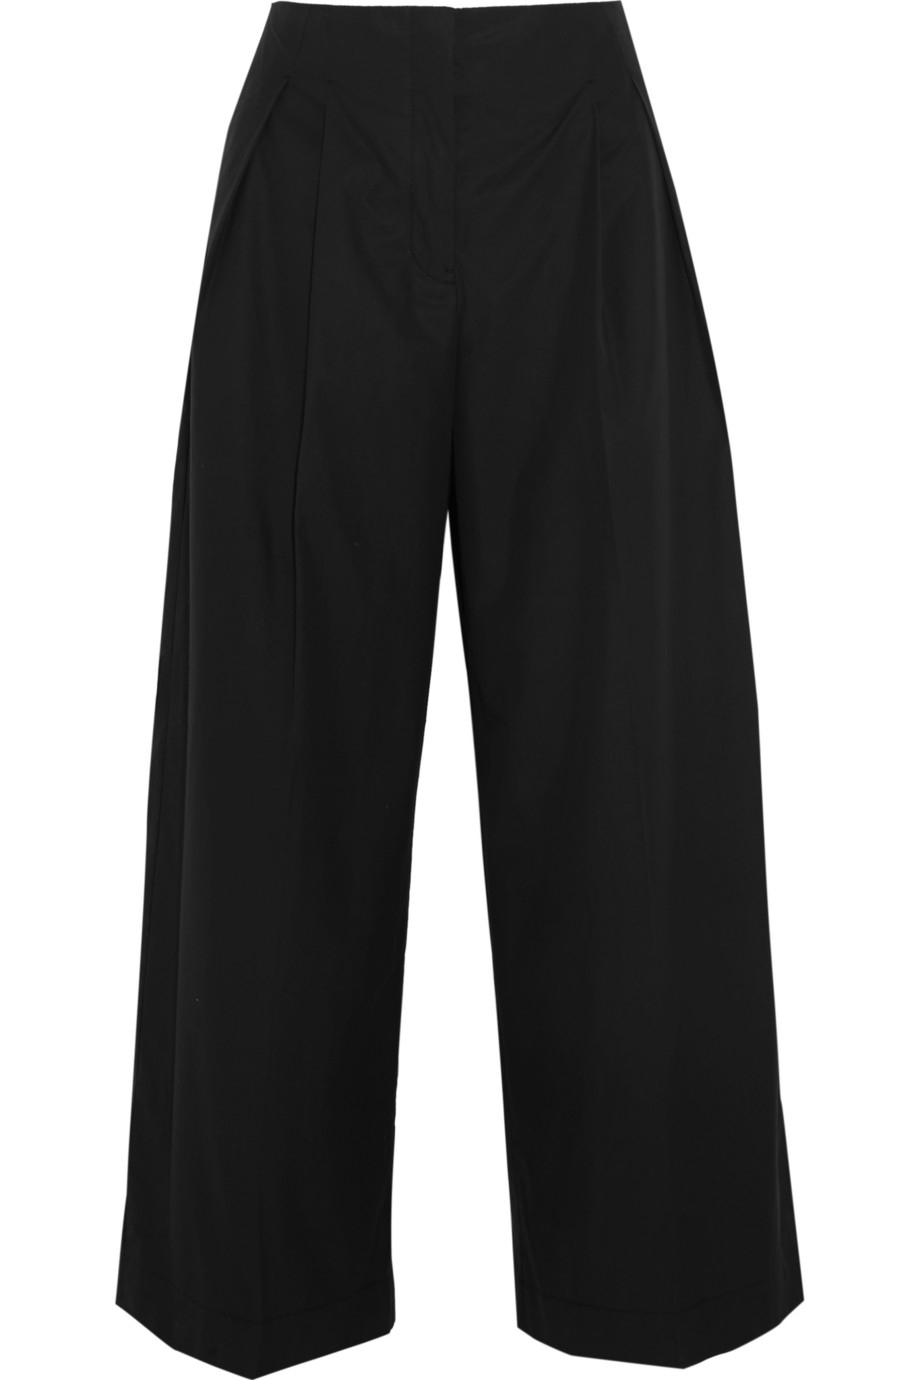 Jil Sander Women's Black Cropped Cotton-Poplin Wide-Leg Pants